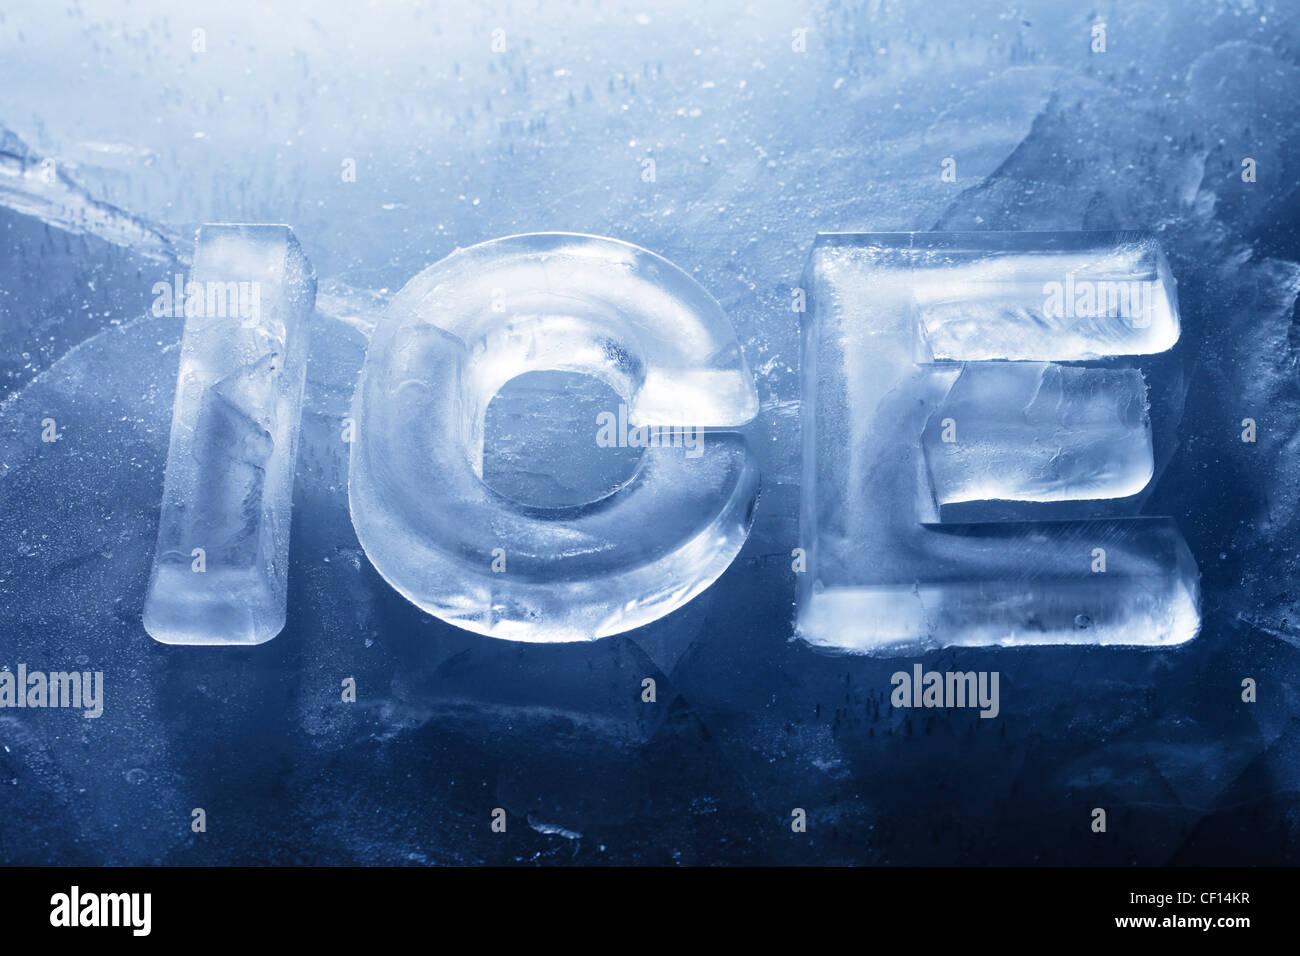 Лед 3 реакция. Буквы из льда. Надпись на льду. Буквы во льду. Надпись из льда.